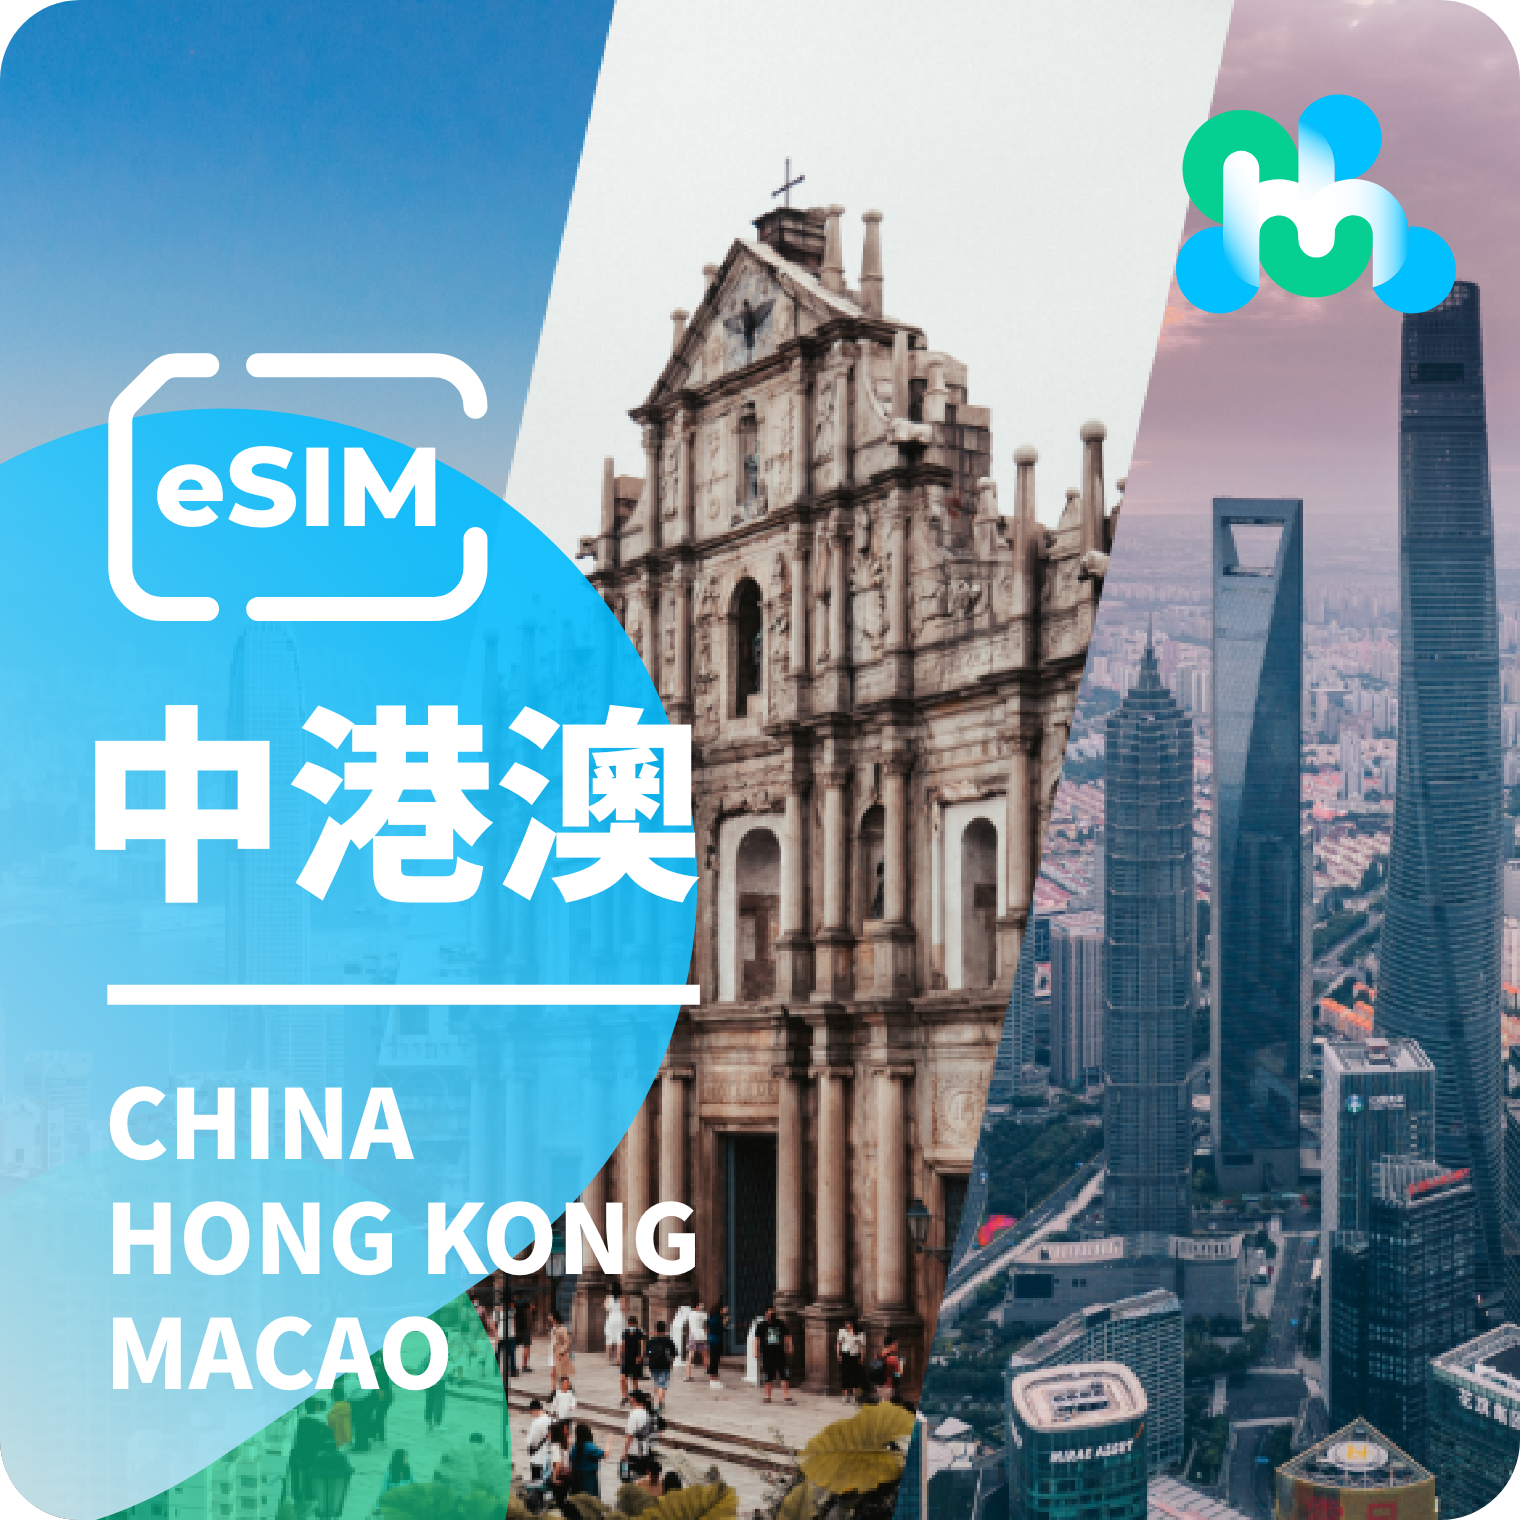 China Hong Kong Macau esim